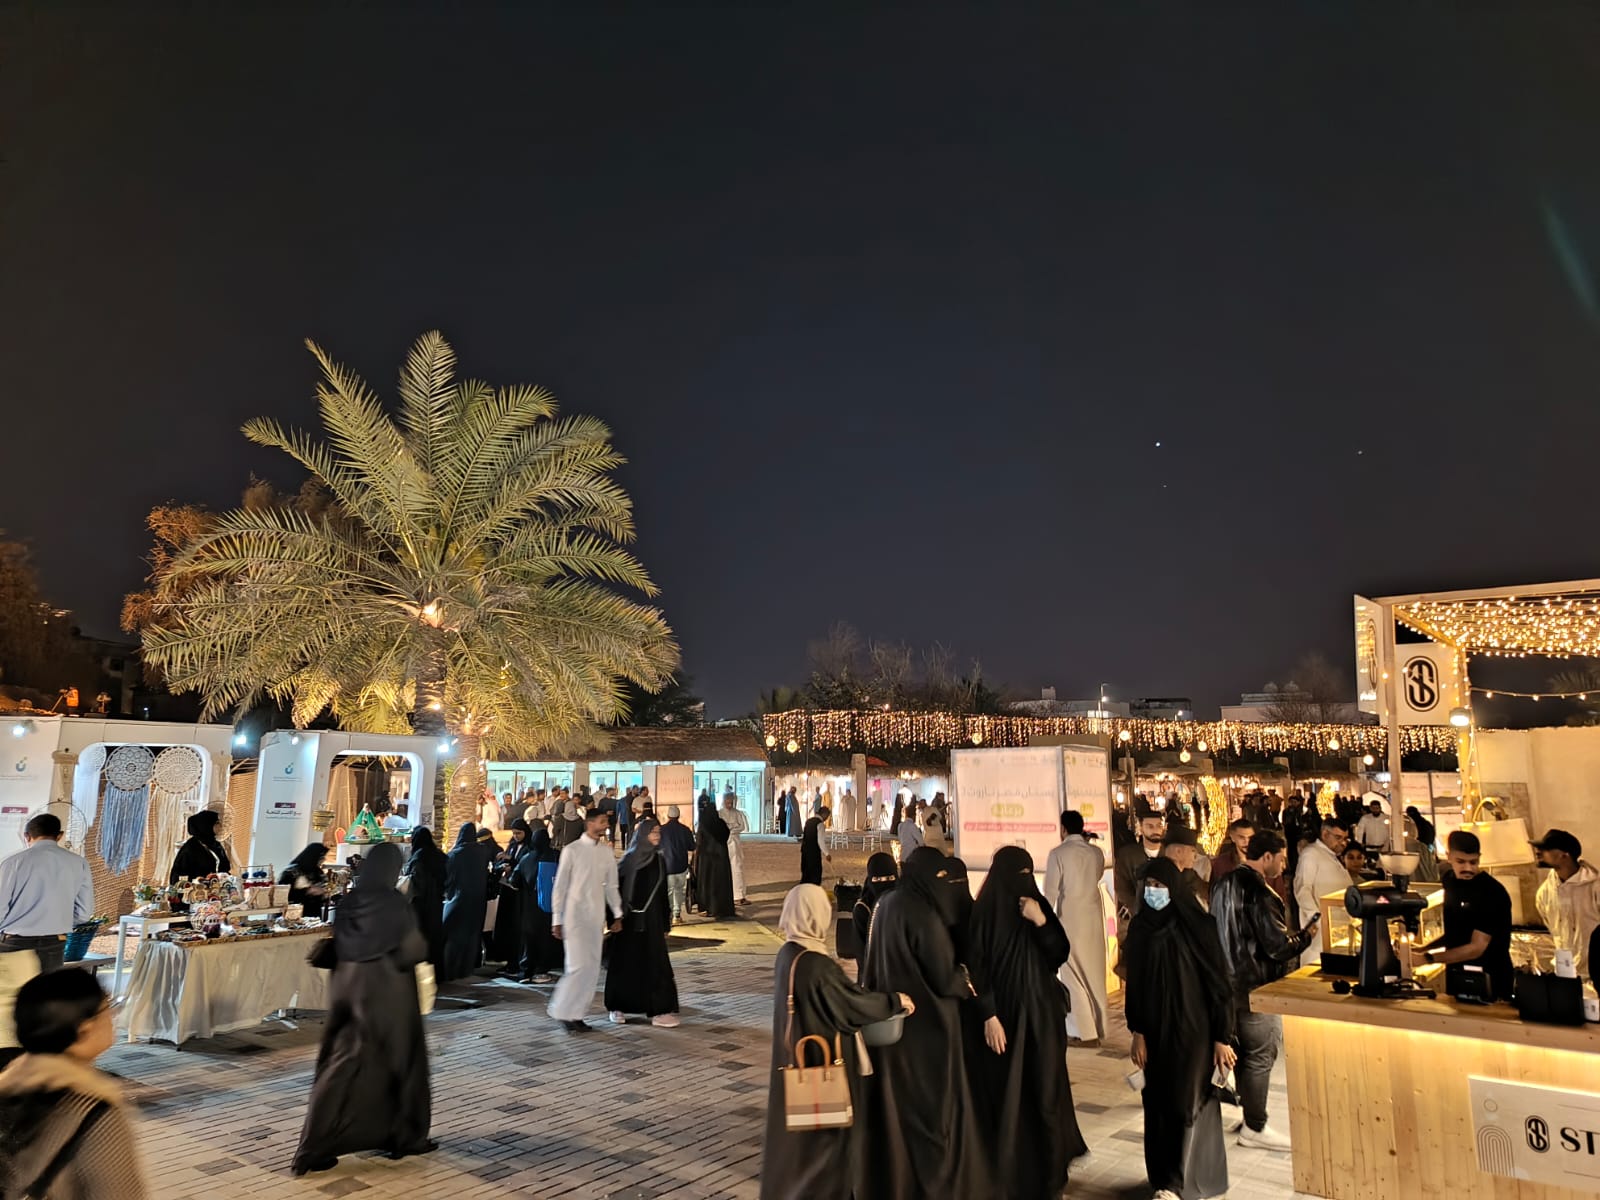 قرقيعان“ بستان قصر تاروت يشهد حضورا كثيفا وسط برامج وأركان متنوعة